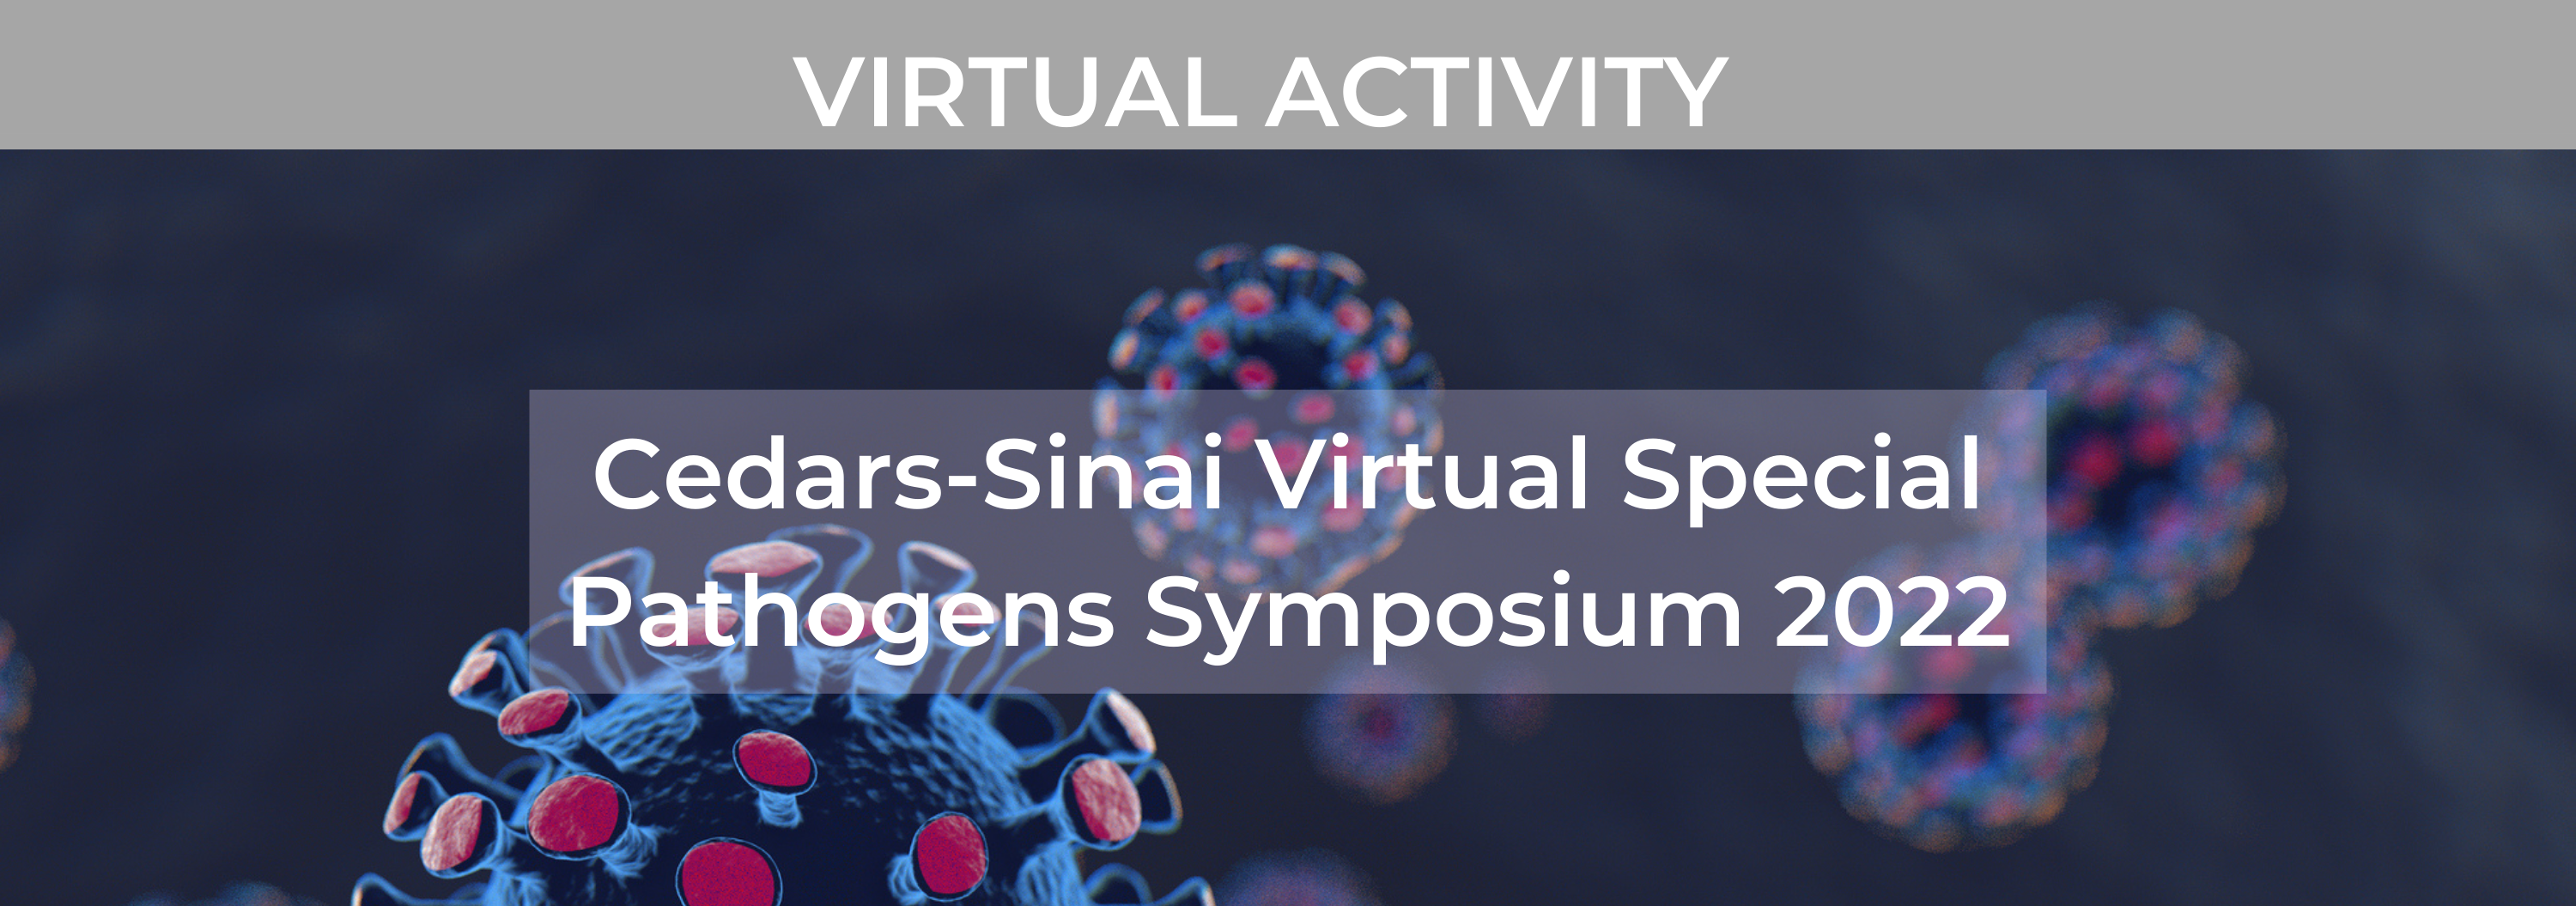 Cedars-Sinai Virtual Special Pathogens Symposium 2022 Banner